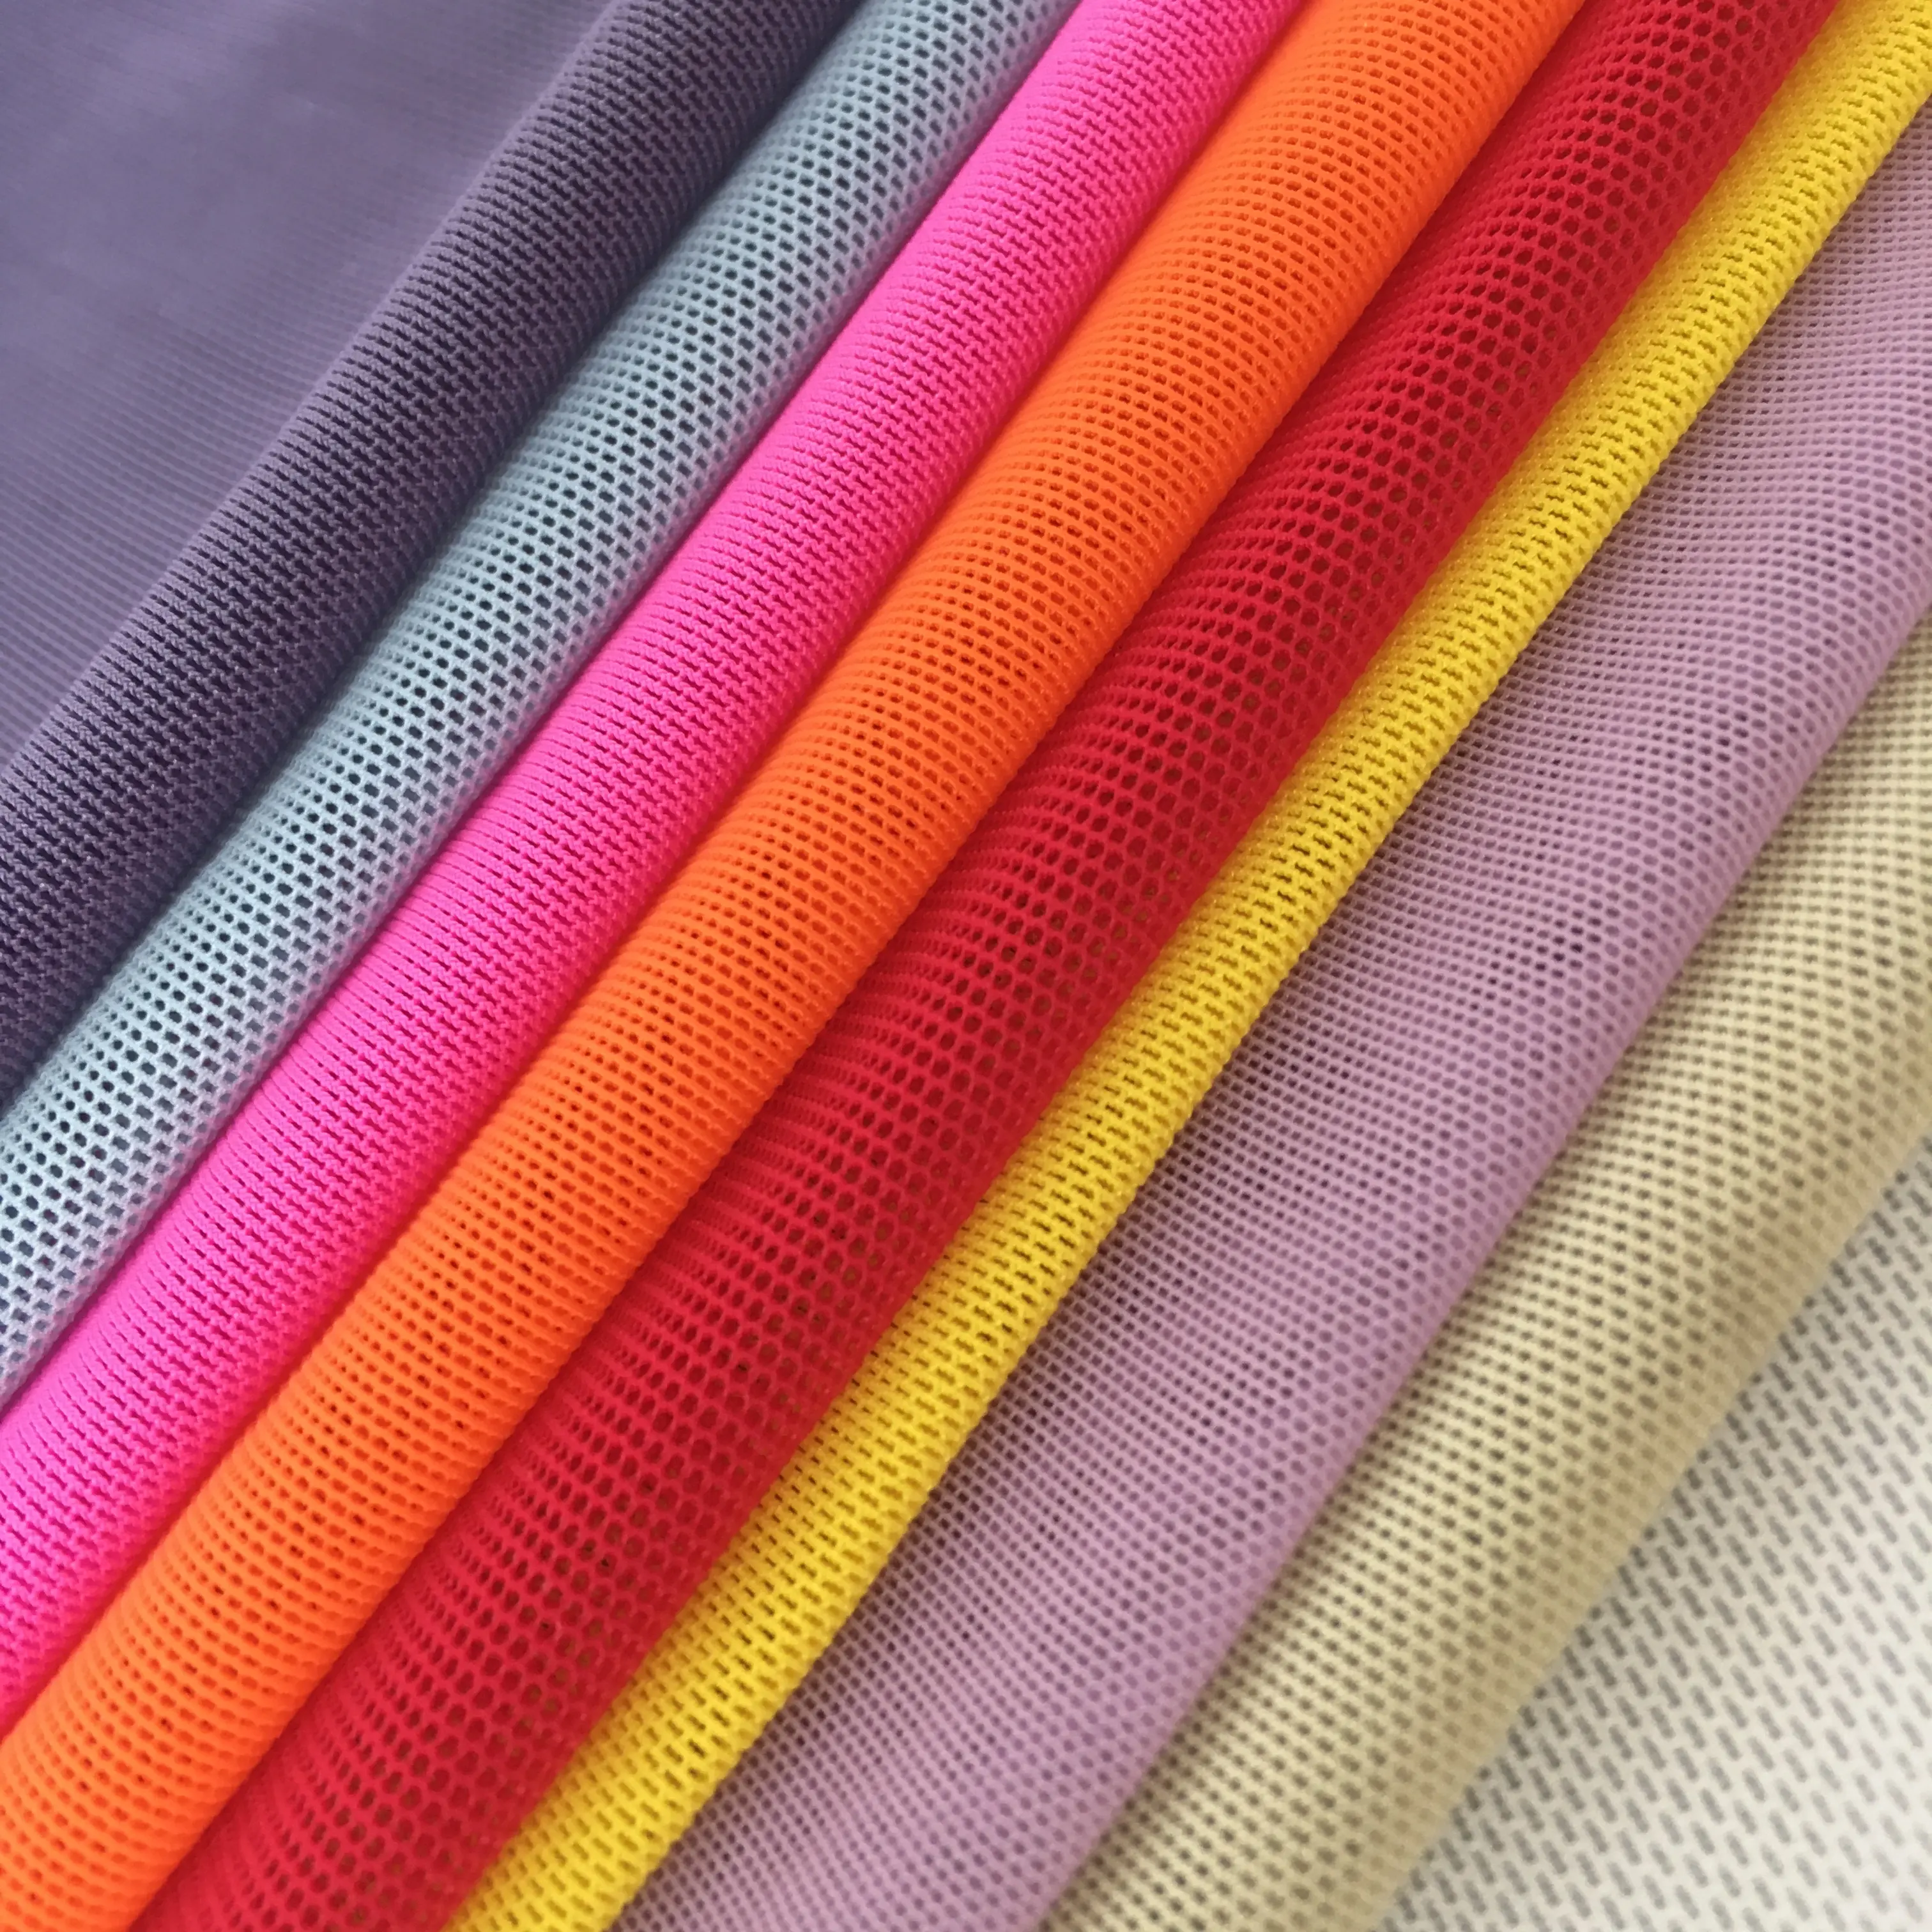 4 Way Stretch Nylon/Spandex Knitting Fabric For Underwear and Yoga